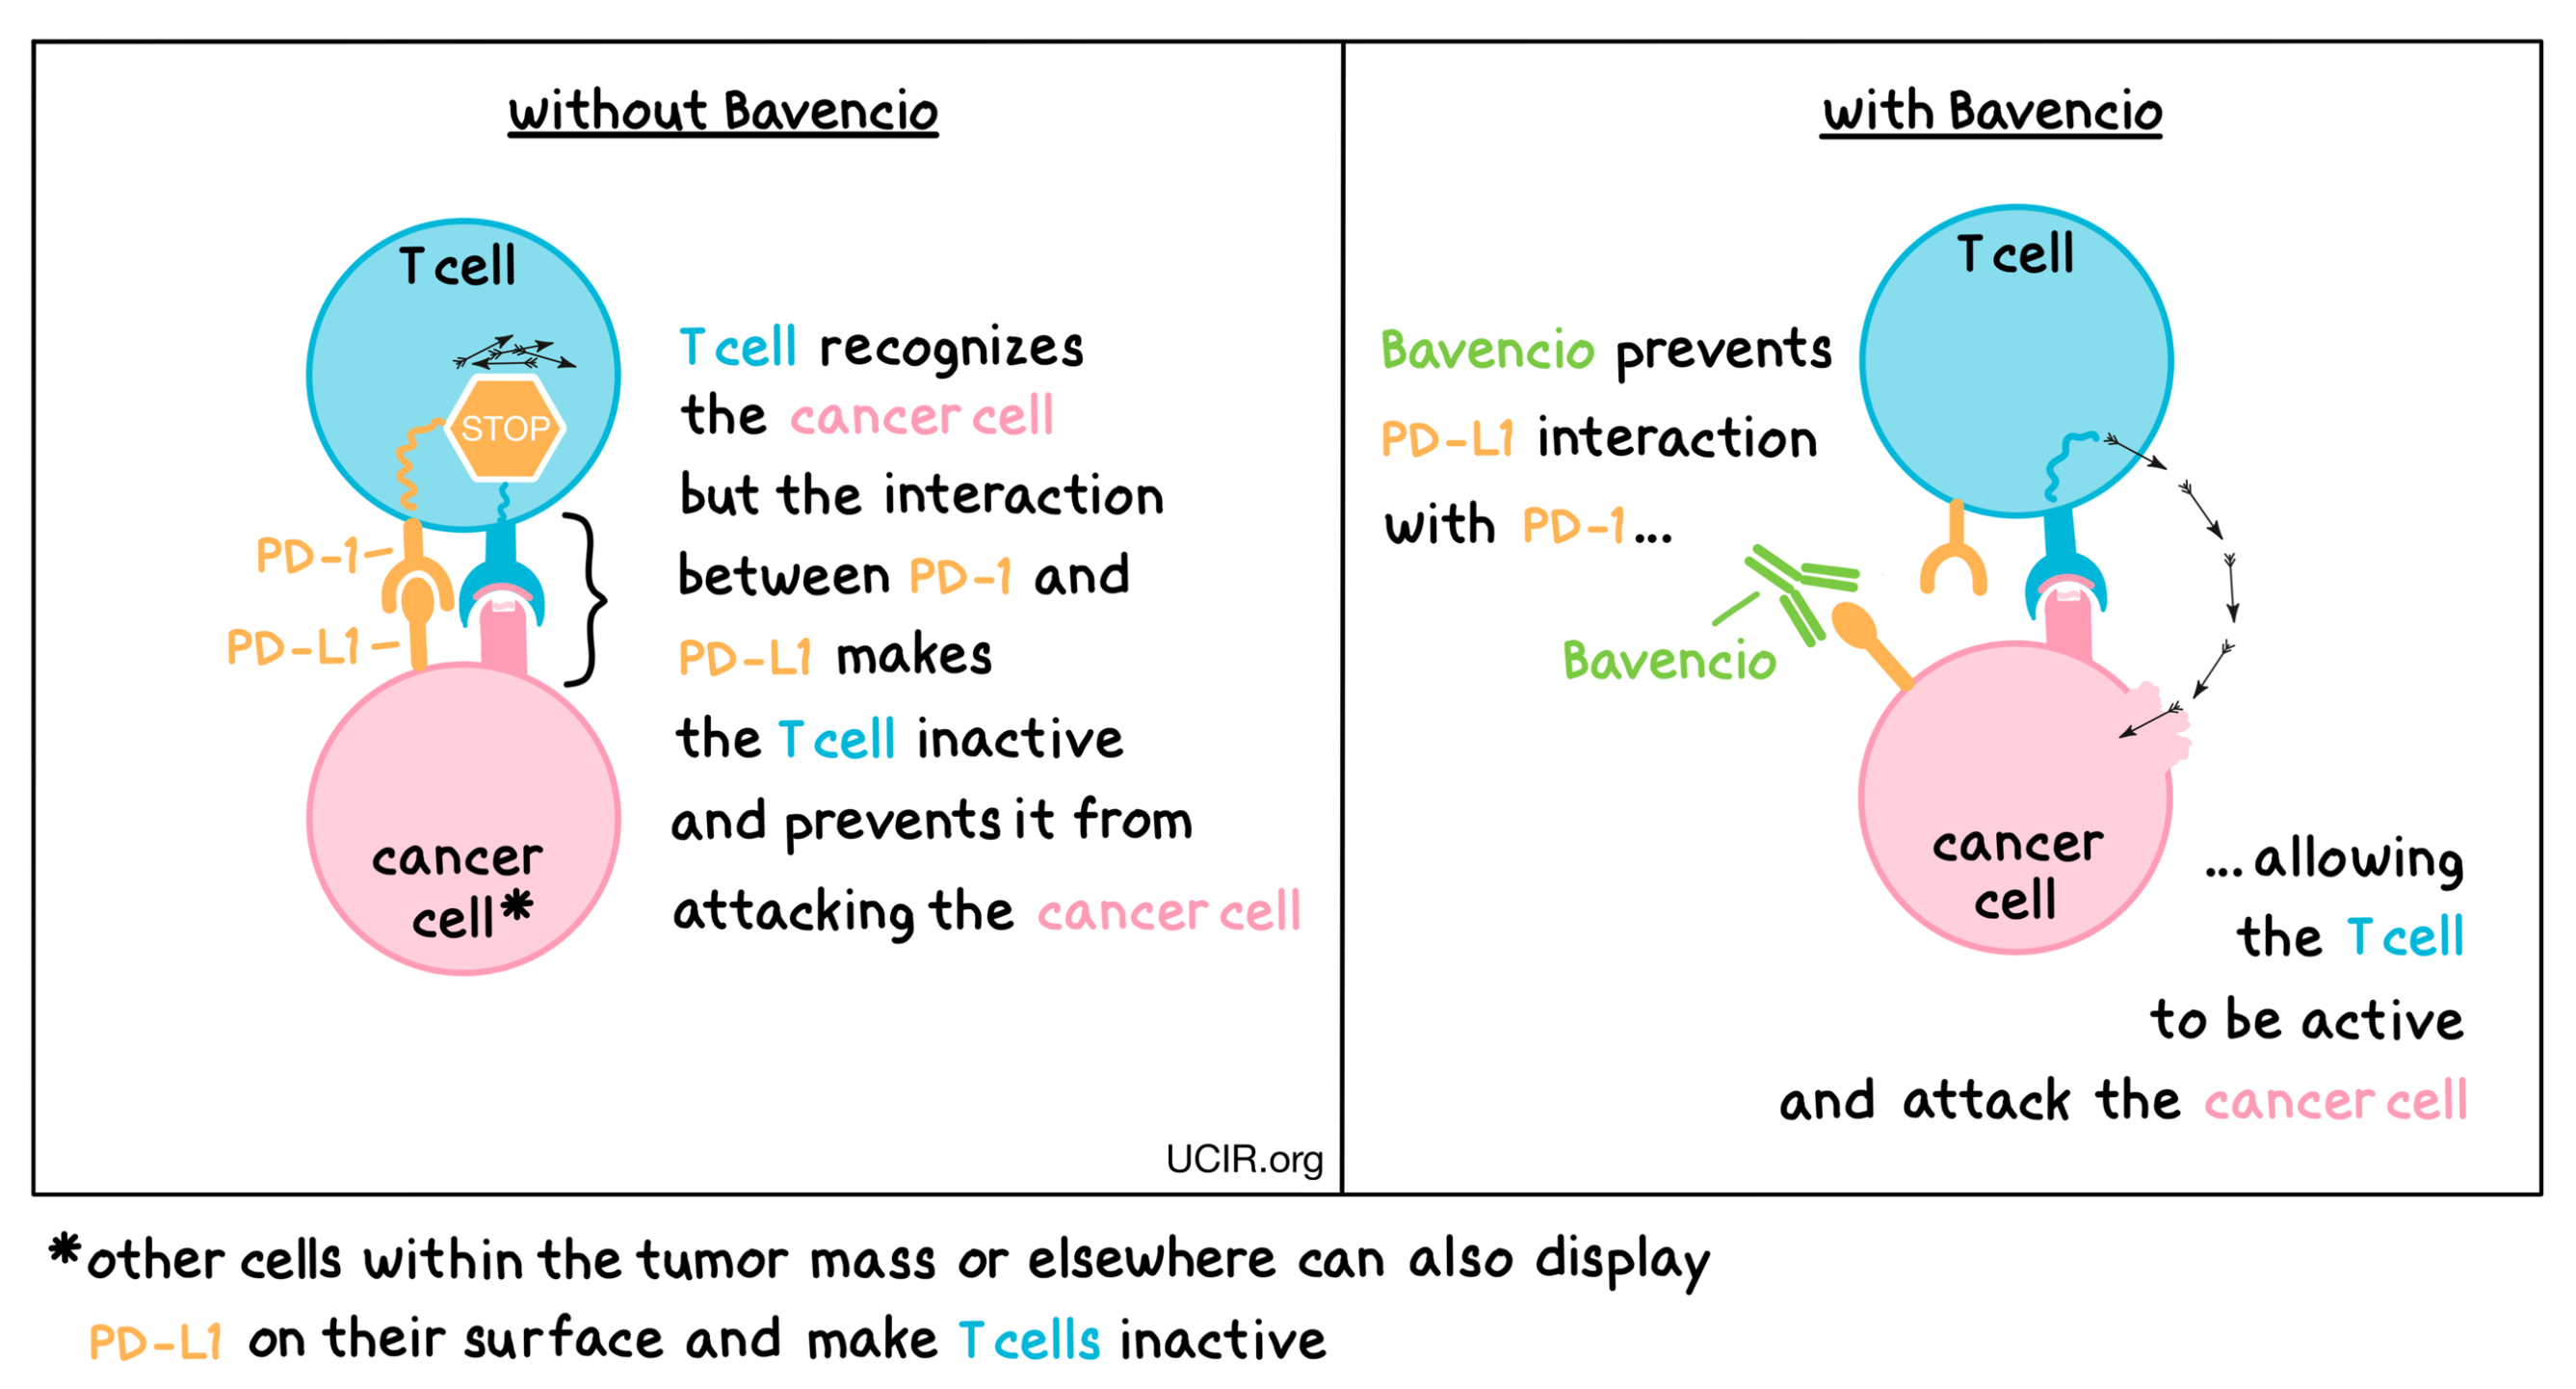 Detailed illustration on how Bavencio works